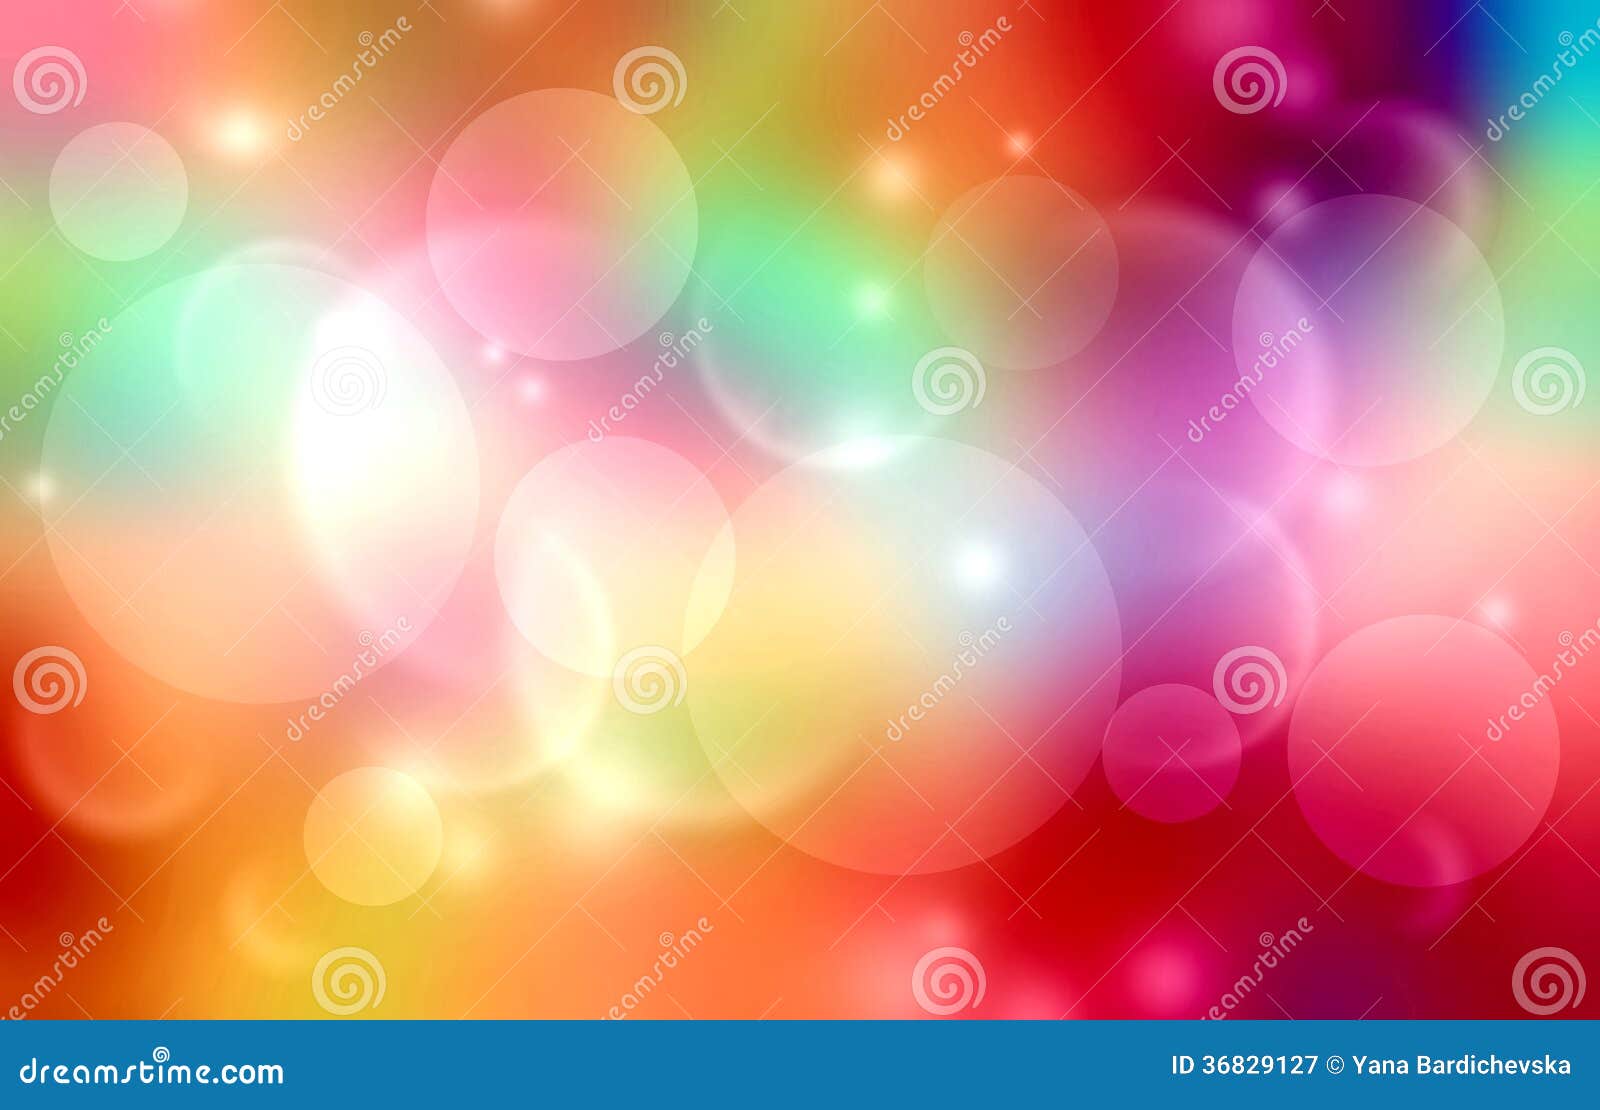 Rainbow Colors Blur Background Stock Illustration - Illustration of blur,  festive: 36829127